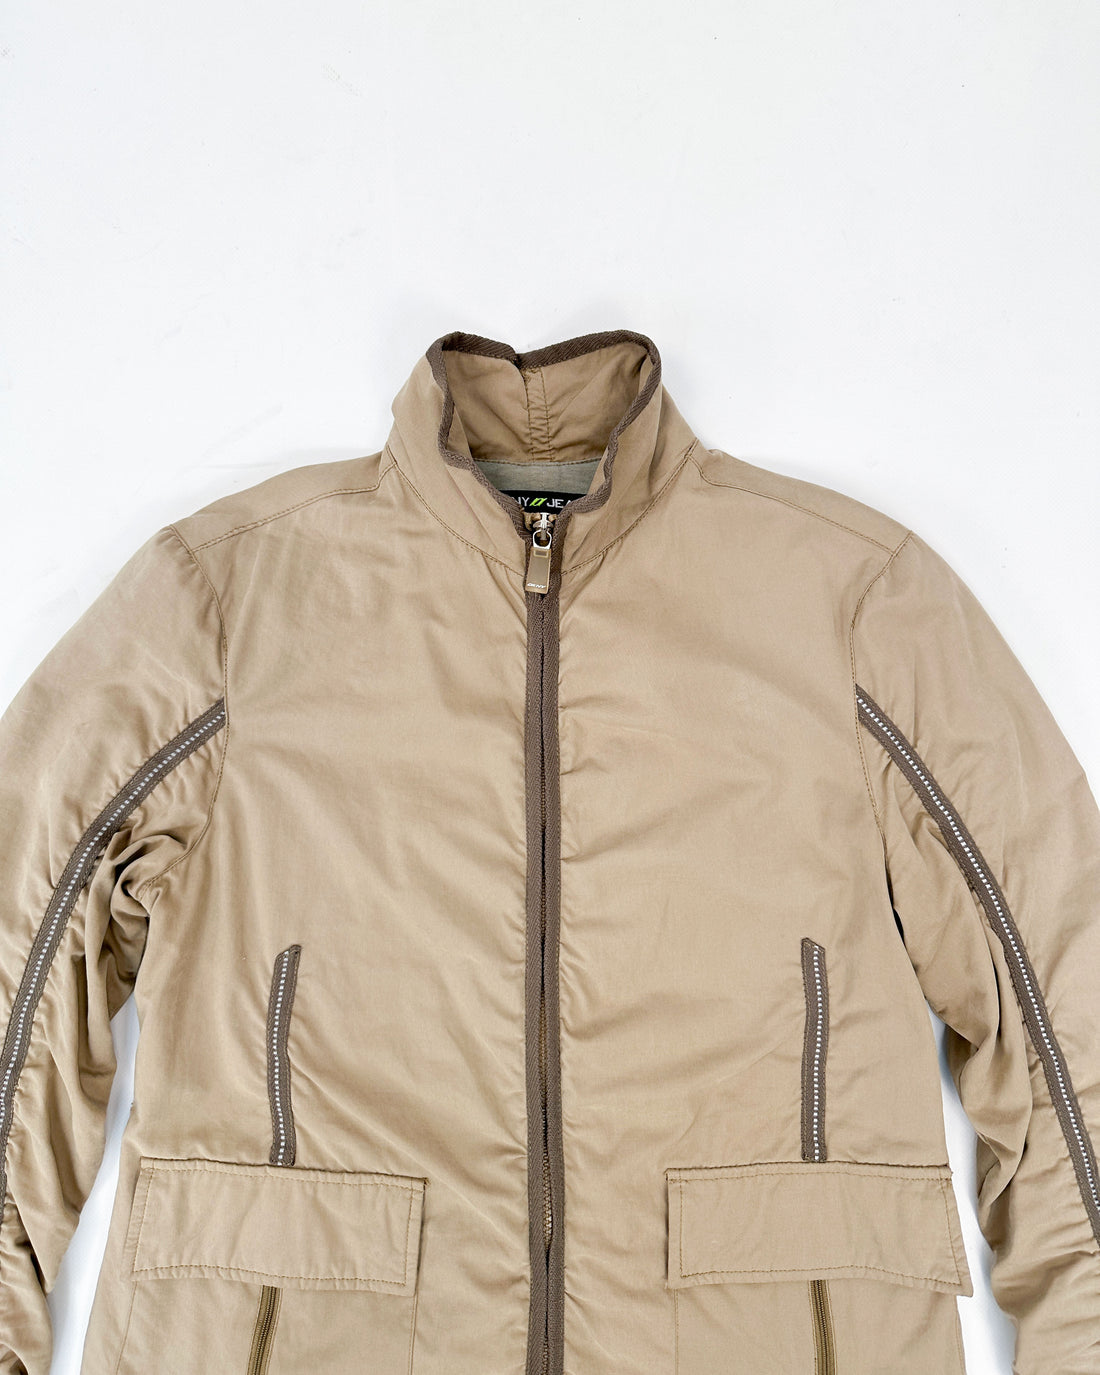 DKNY Beige Zipped Utility Jacket 1990's